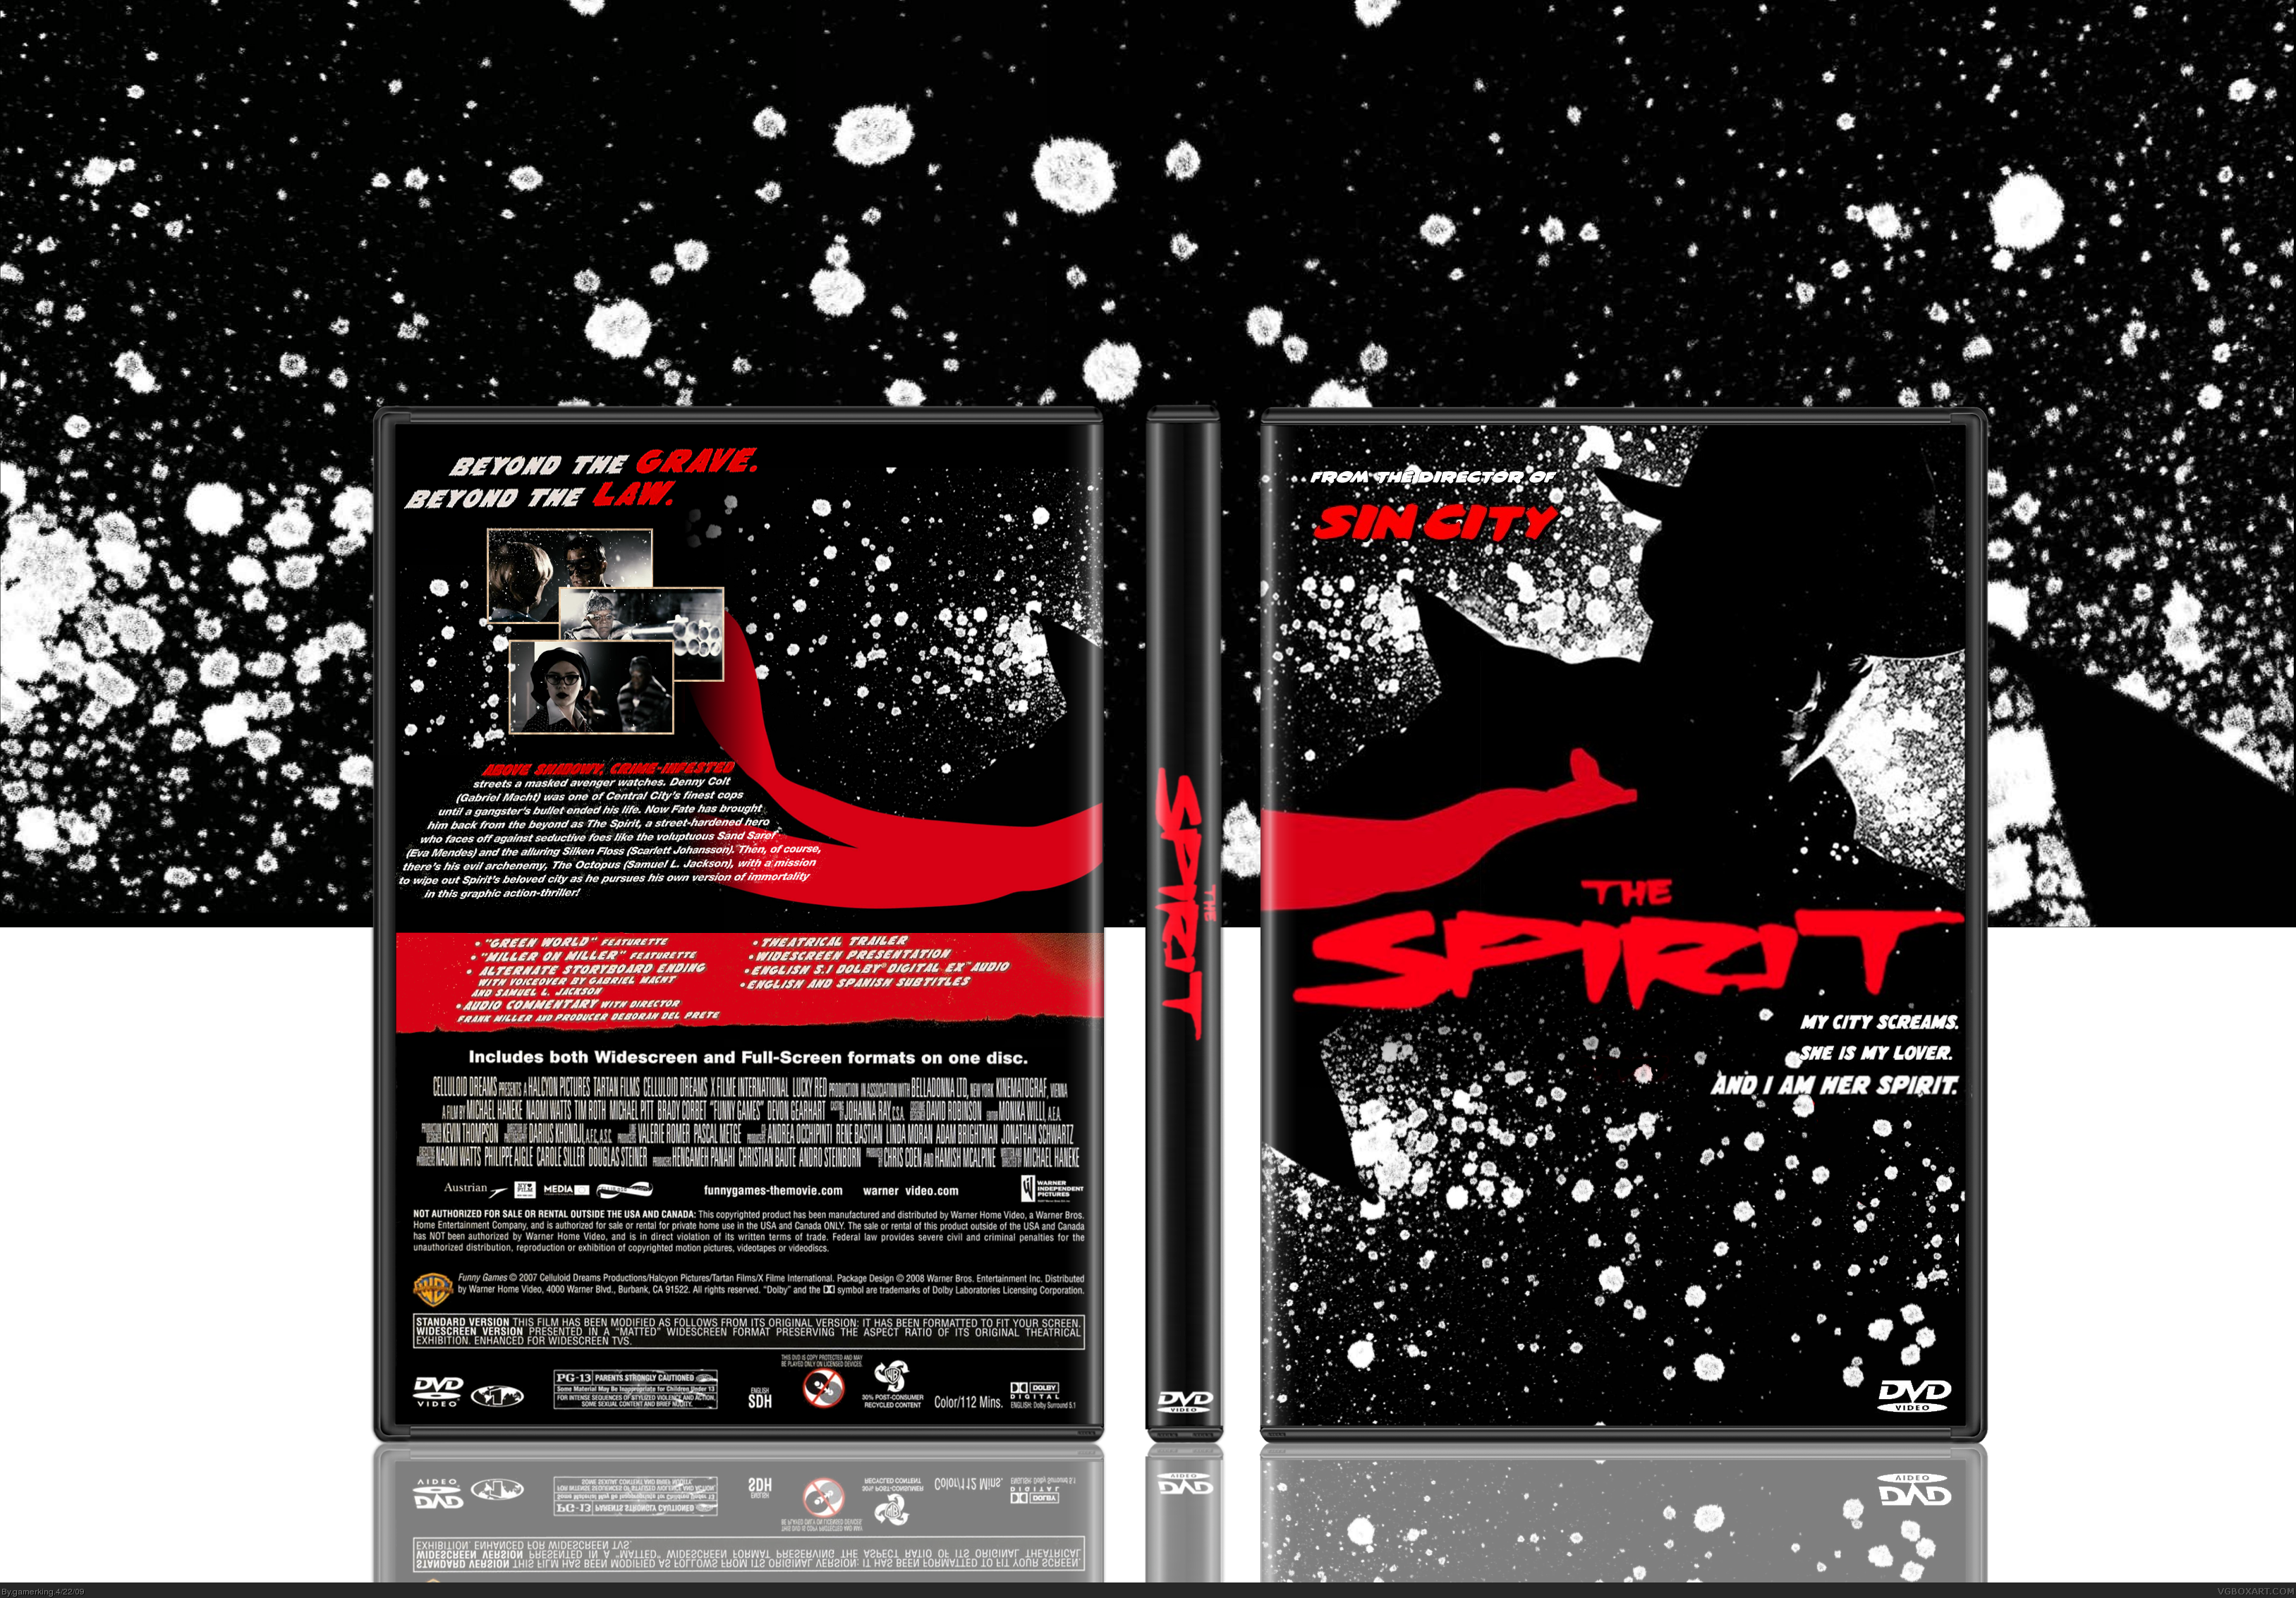 The Spirit box cover